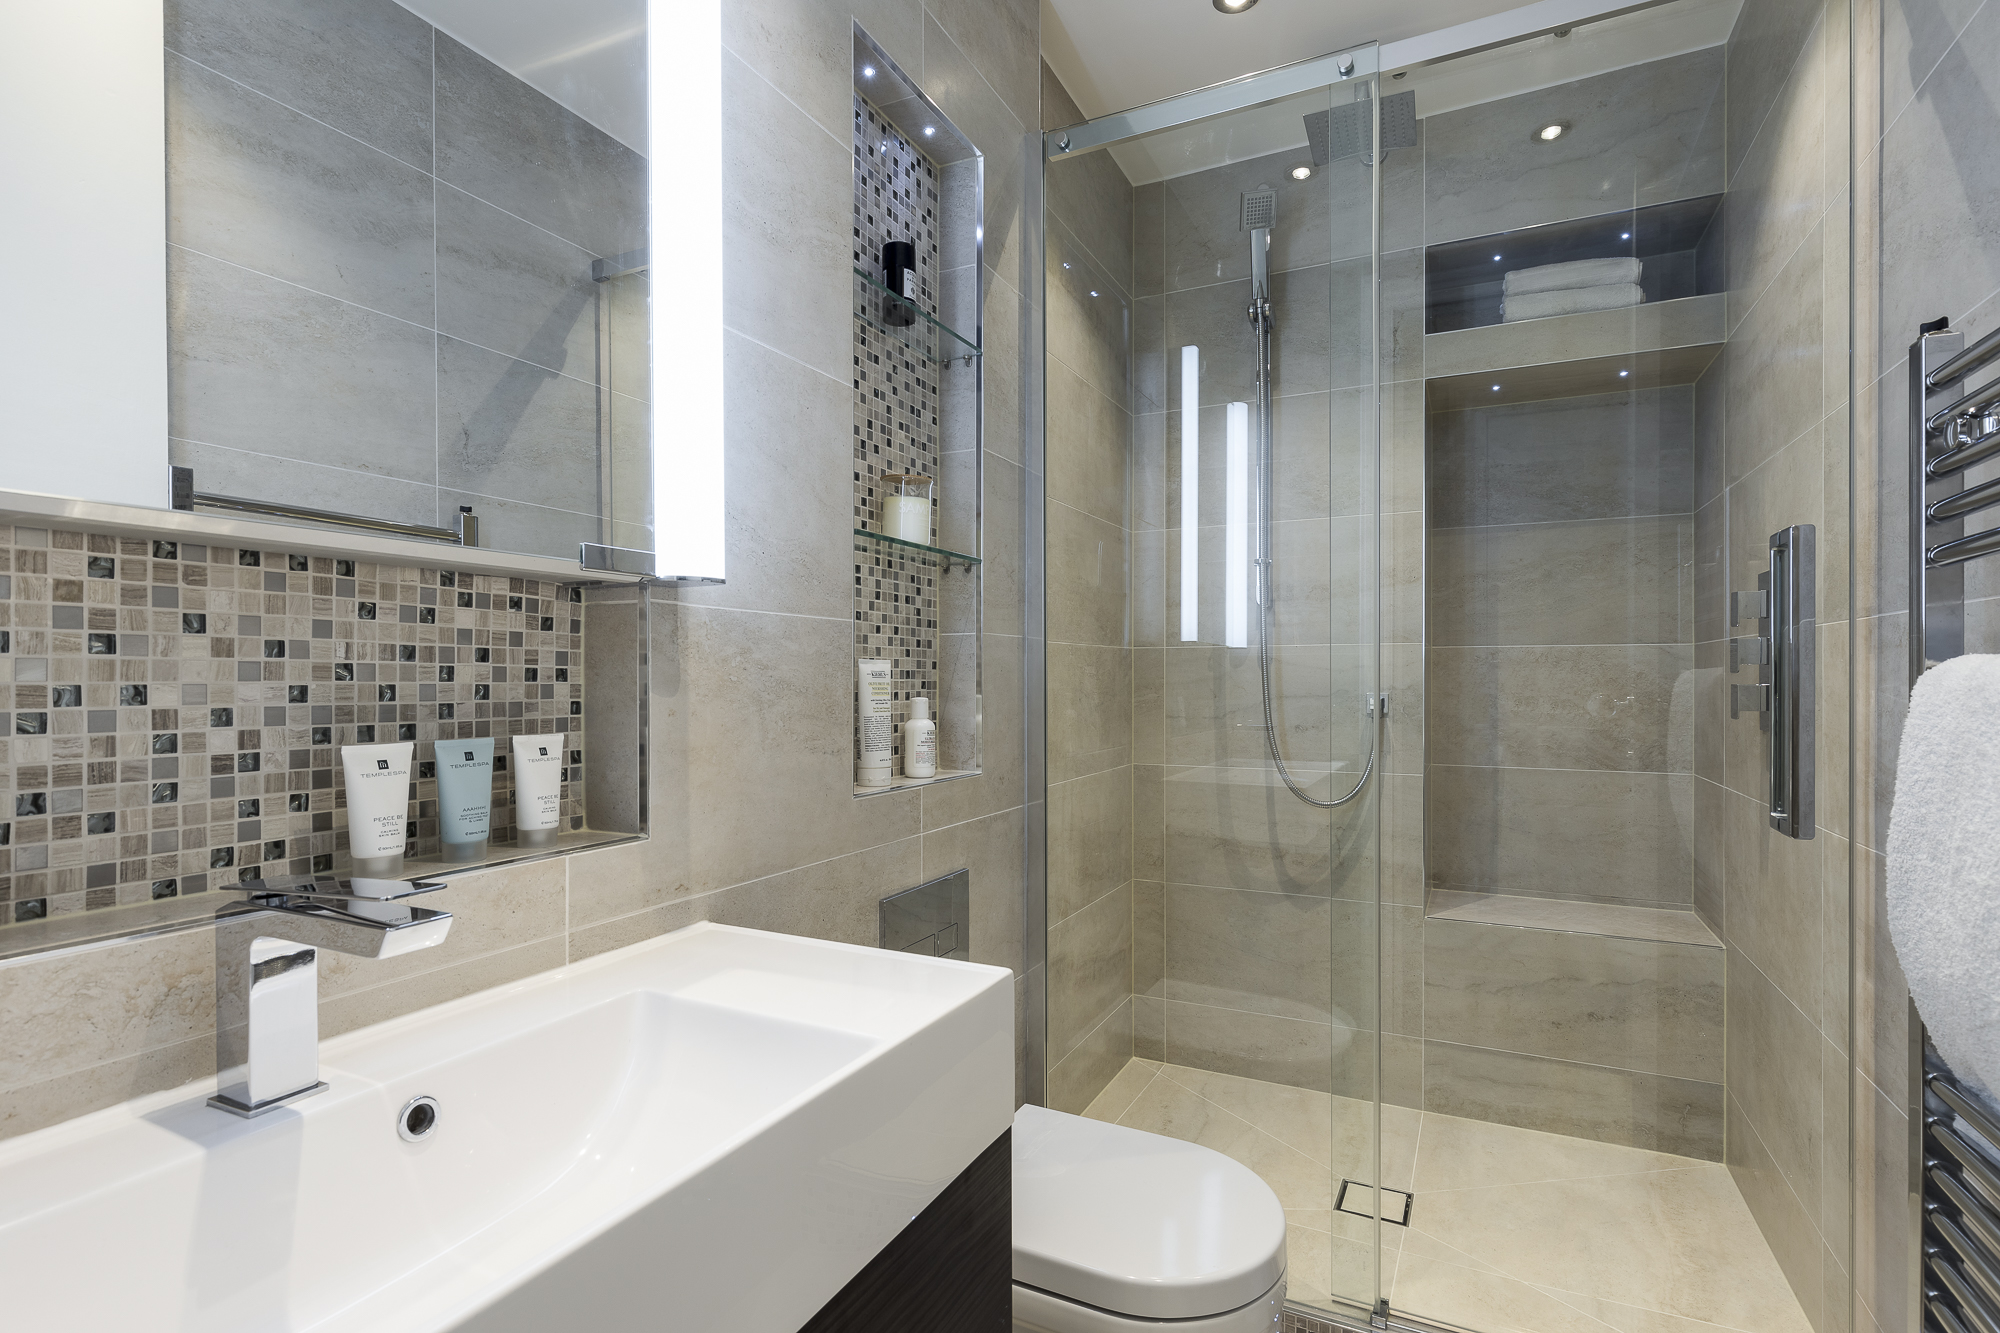 5 Small Bathroom Shower Design Ideas, Small Bathroom Design Ideas 2020 With Shower